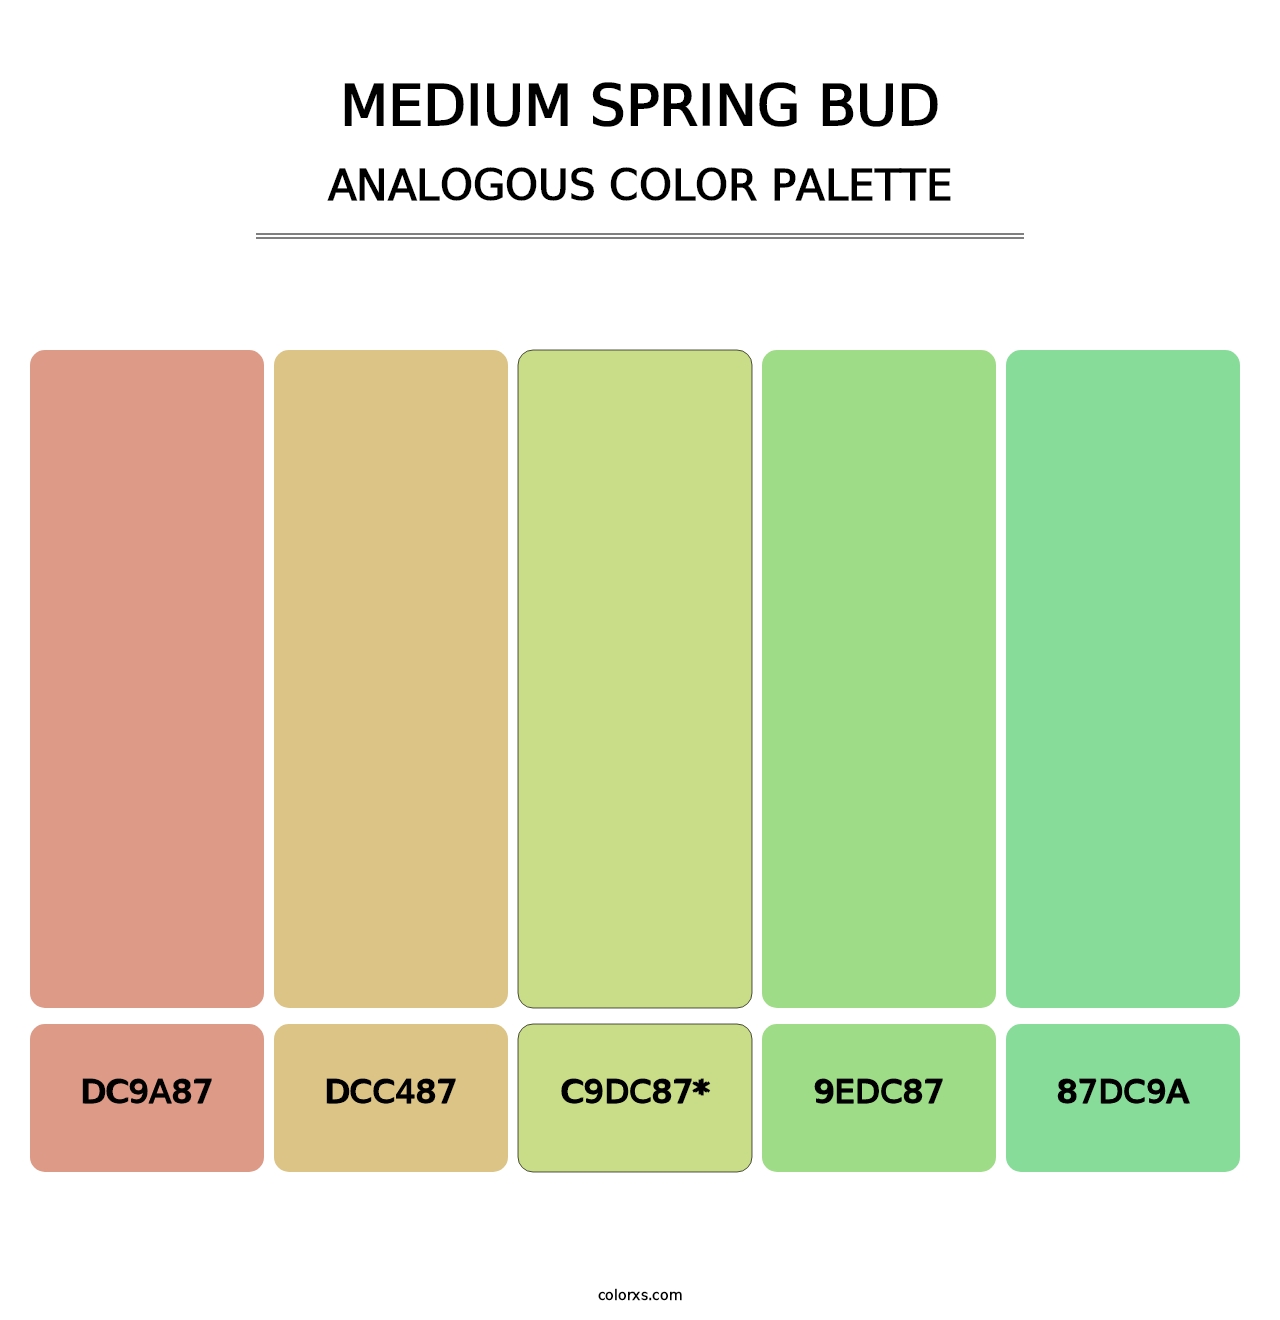 Medium Spring Bud - Analogous Color Palette